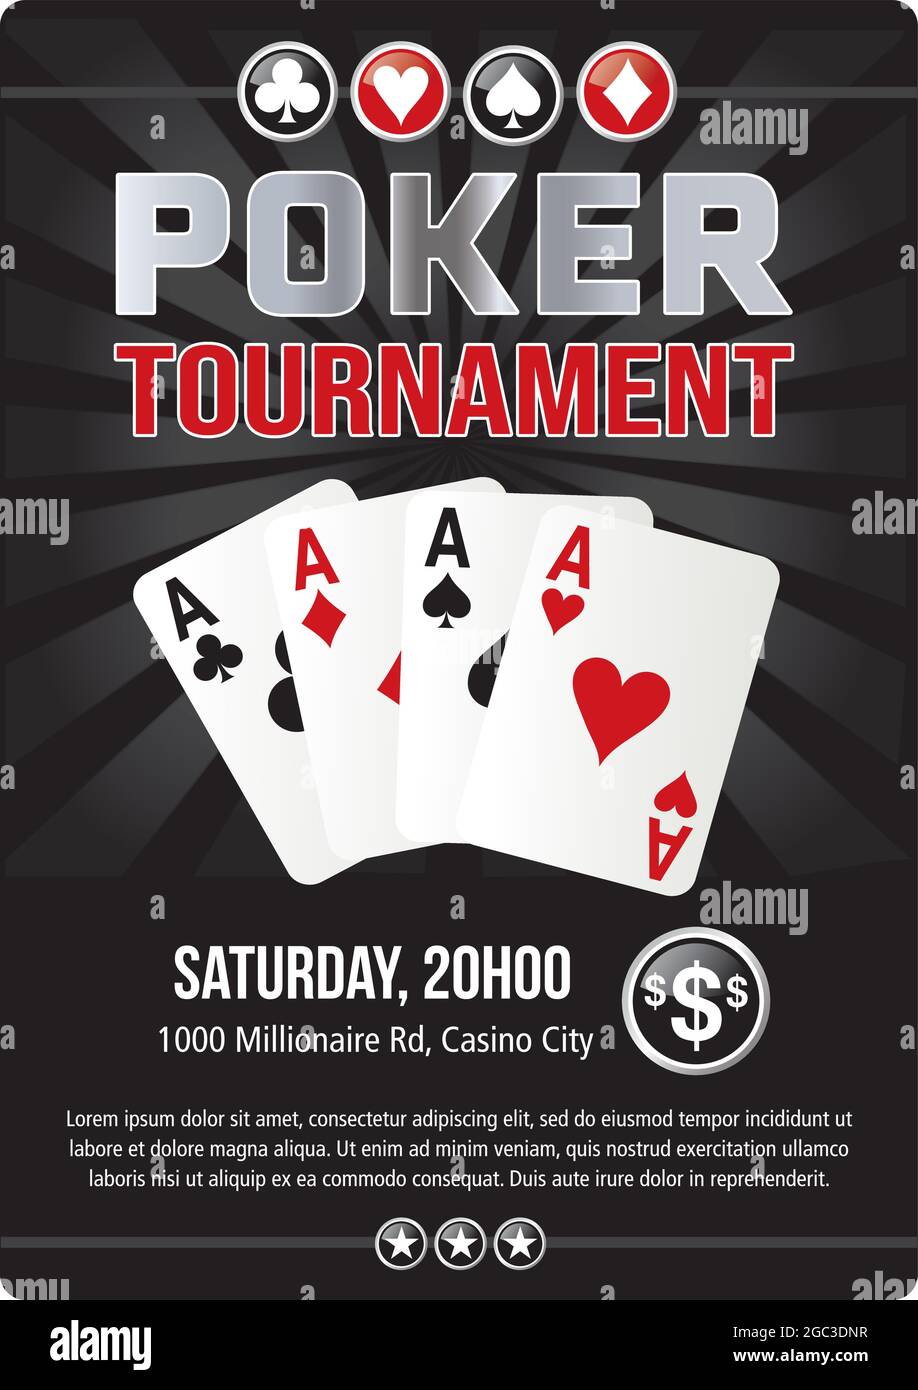 Poker night tournament event invitation design poster in vector Stock  Vector Image & Art - Alamy